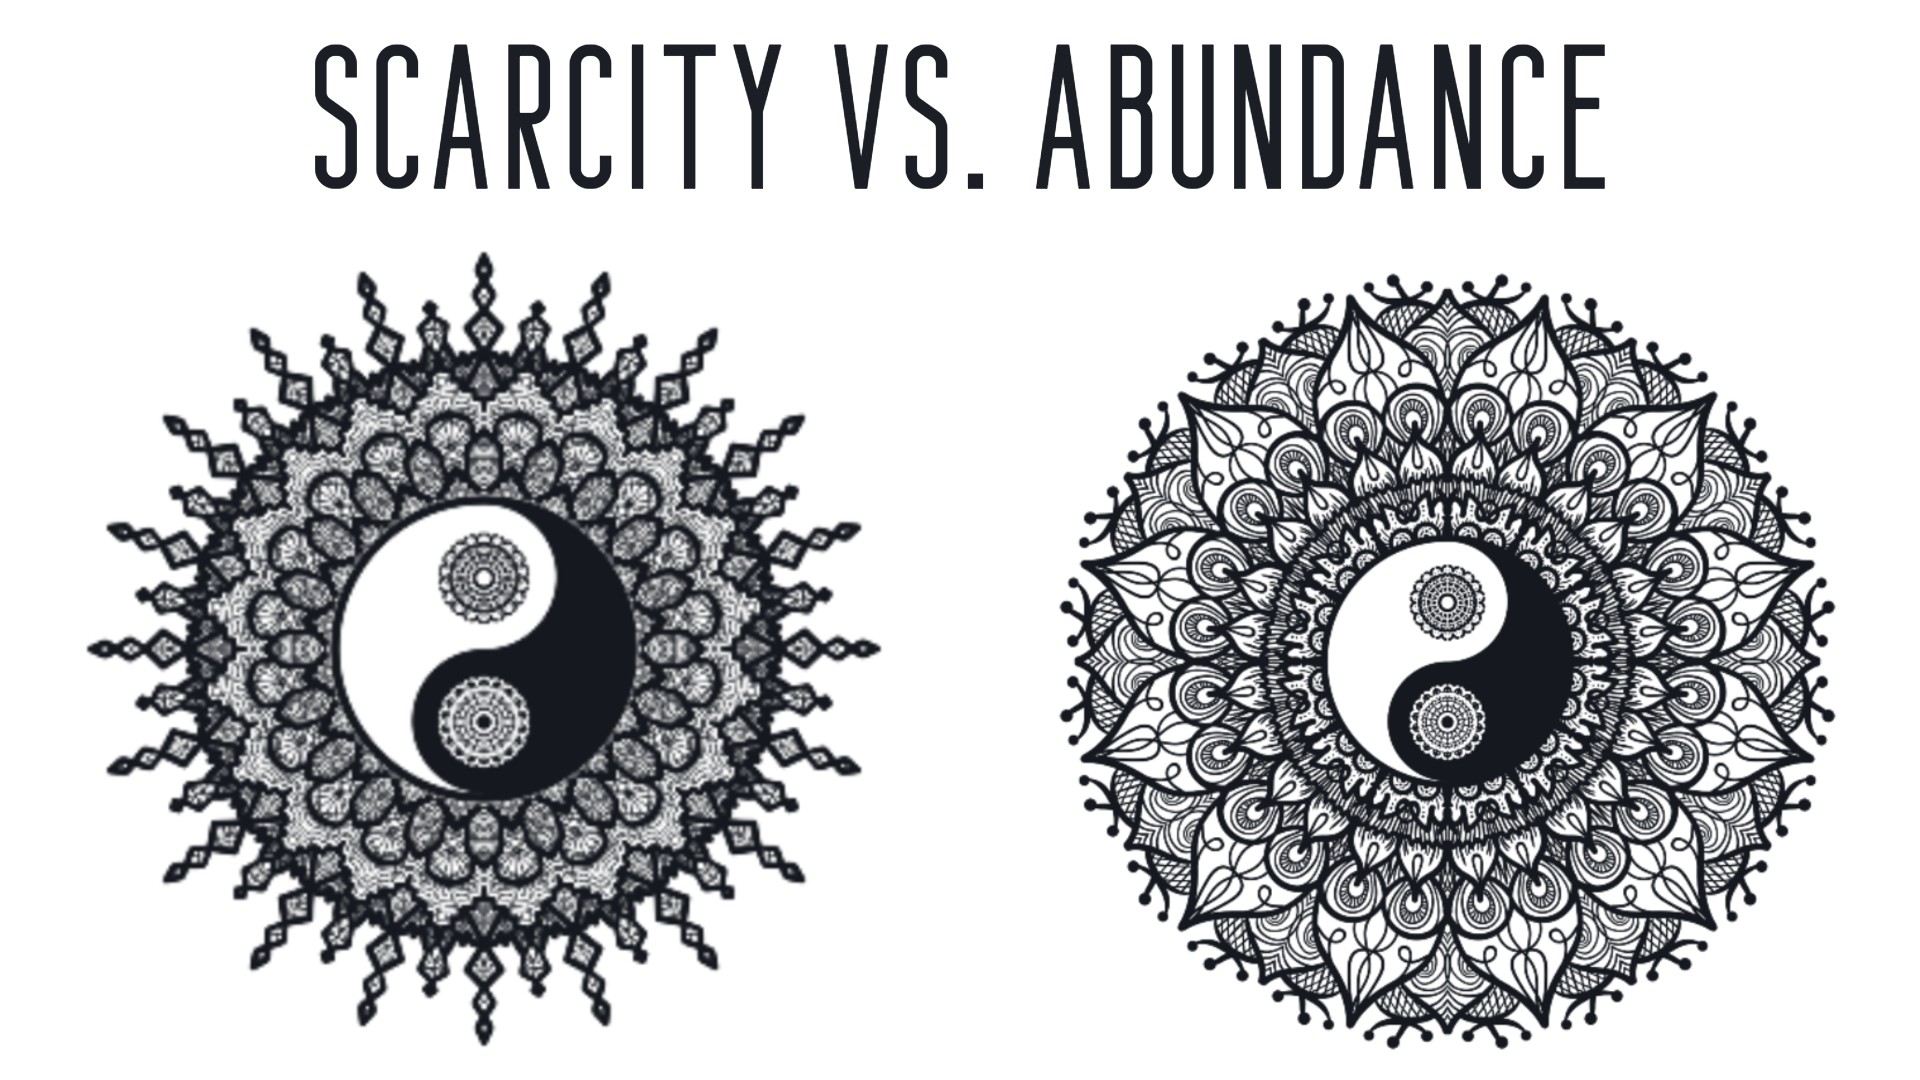 Scarcity vs Abundance